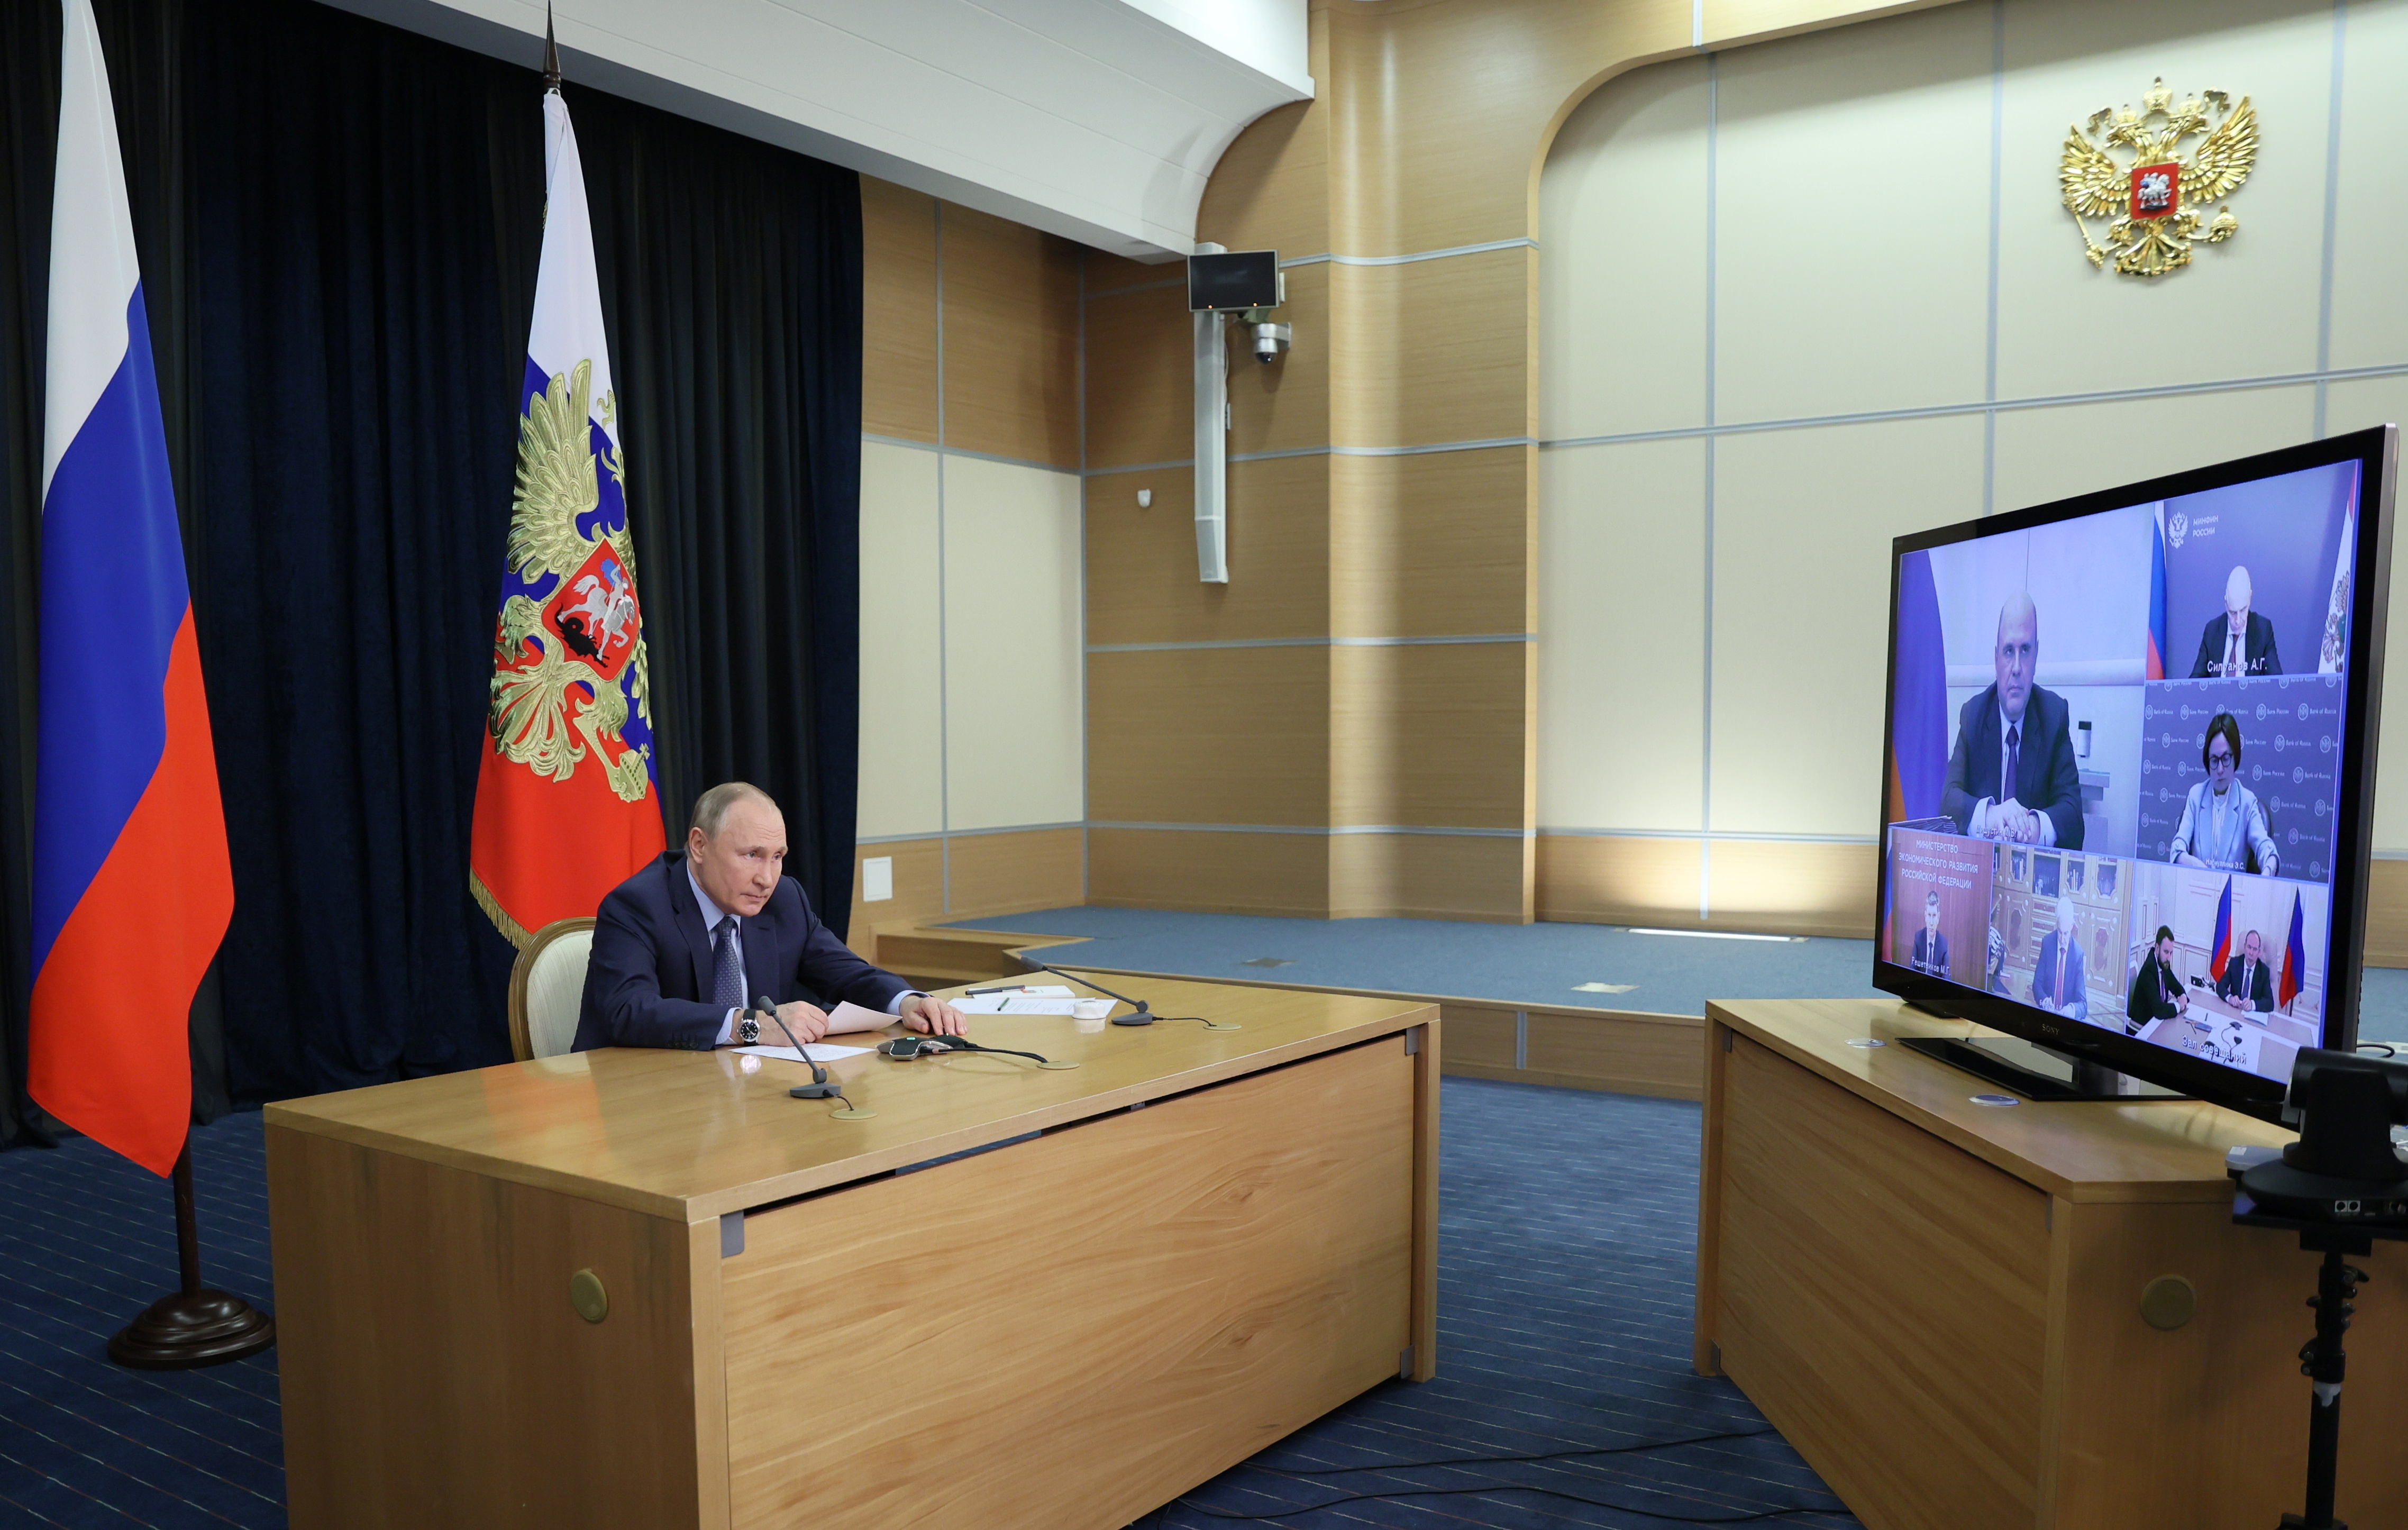 Russian President Vladimir Putin chairs a meeting on economic issues via a video link in Sochi, Russia December 7, 2021. Sputnik/Mikhail Metzel/Pool via REUTERS